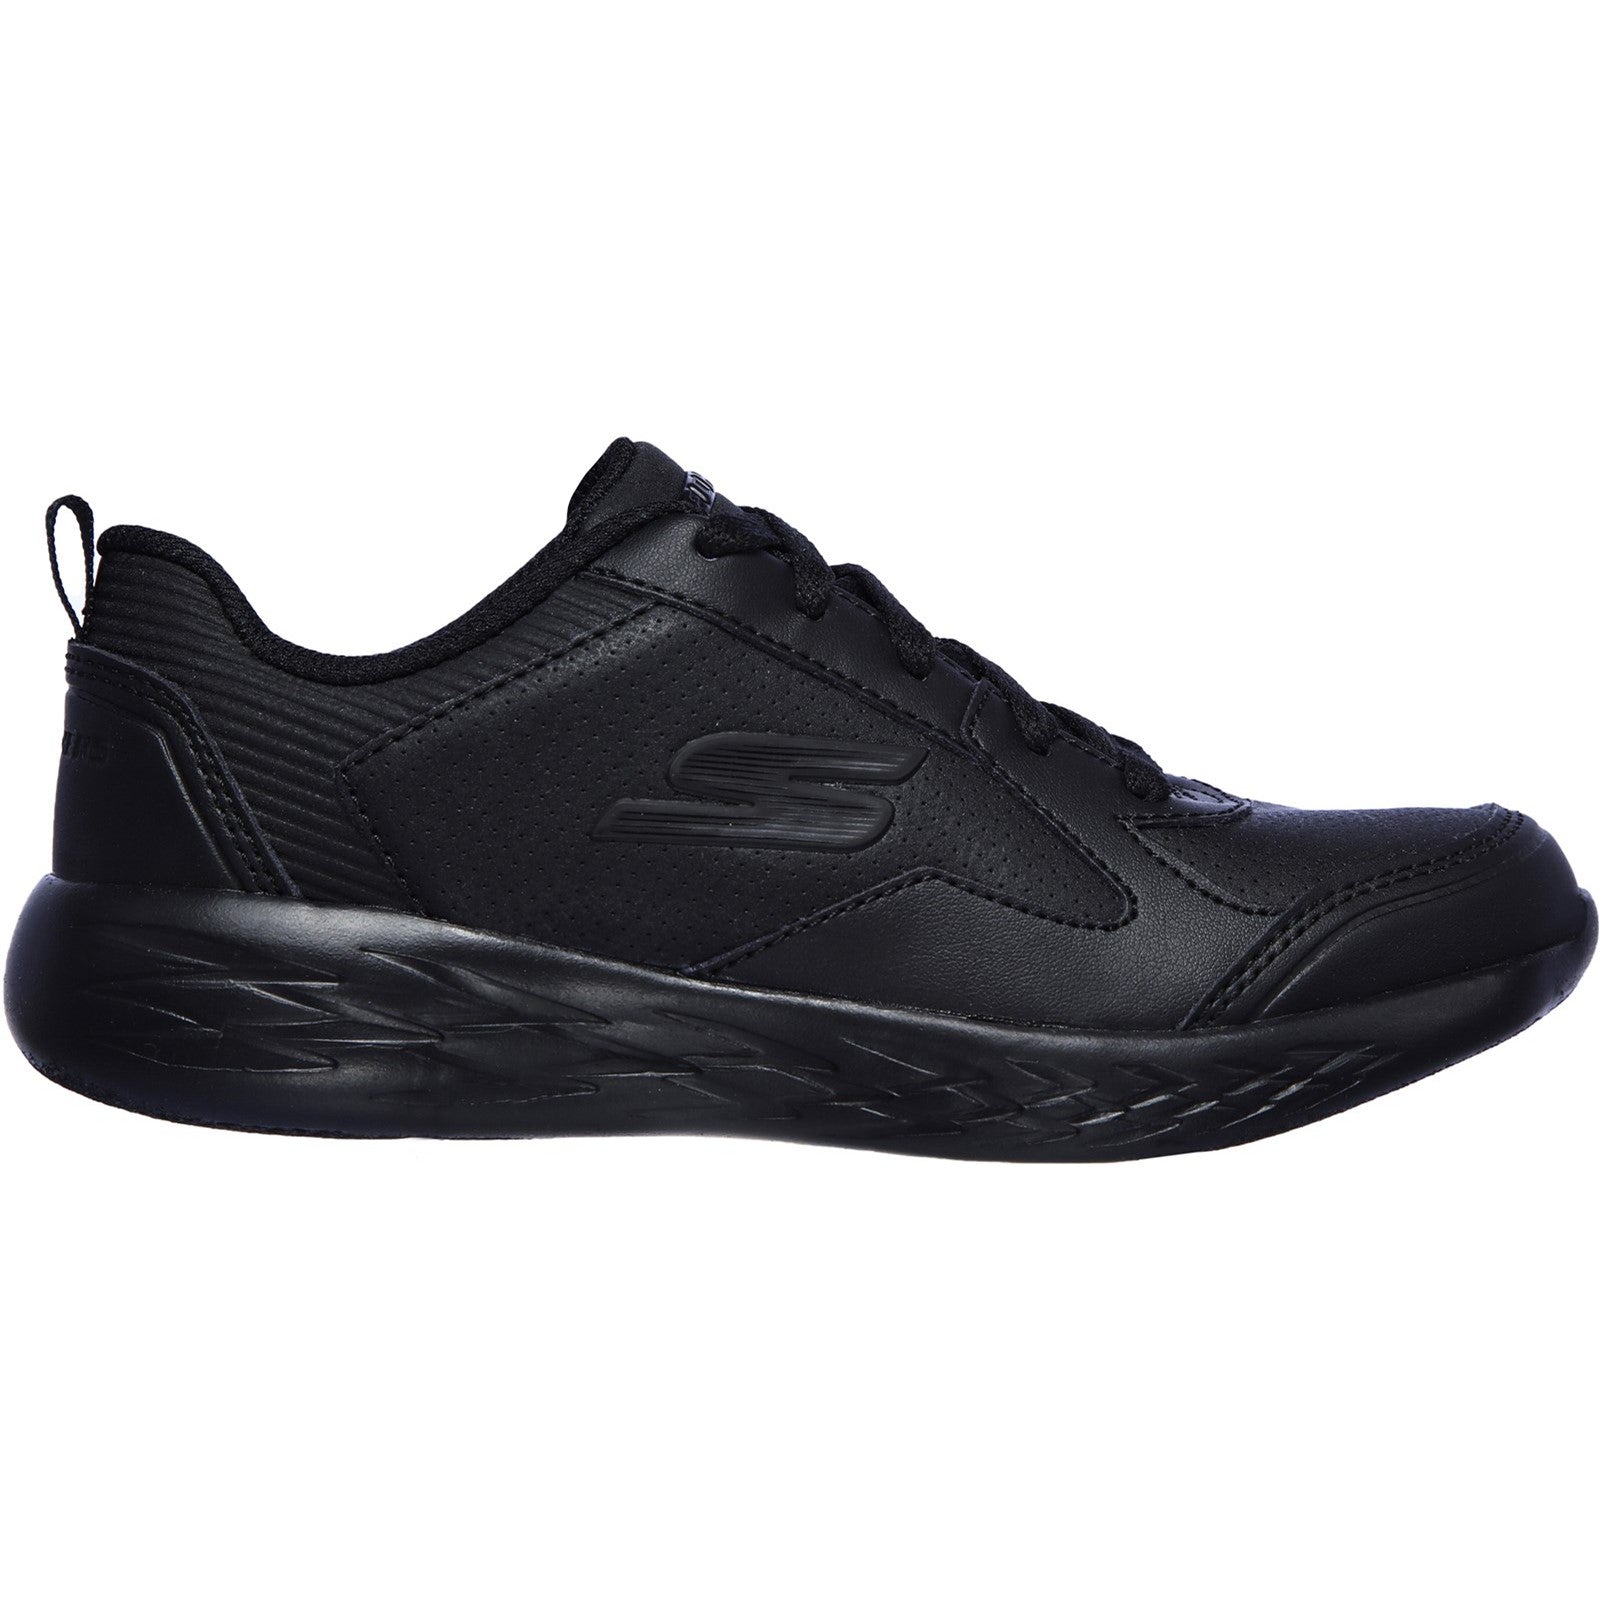 Skechers Boys Go Run 600 Bexor School Shoes - Black